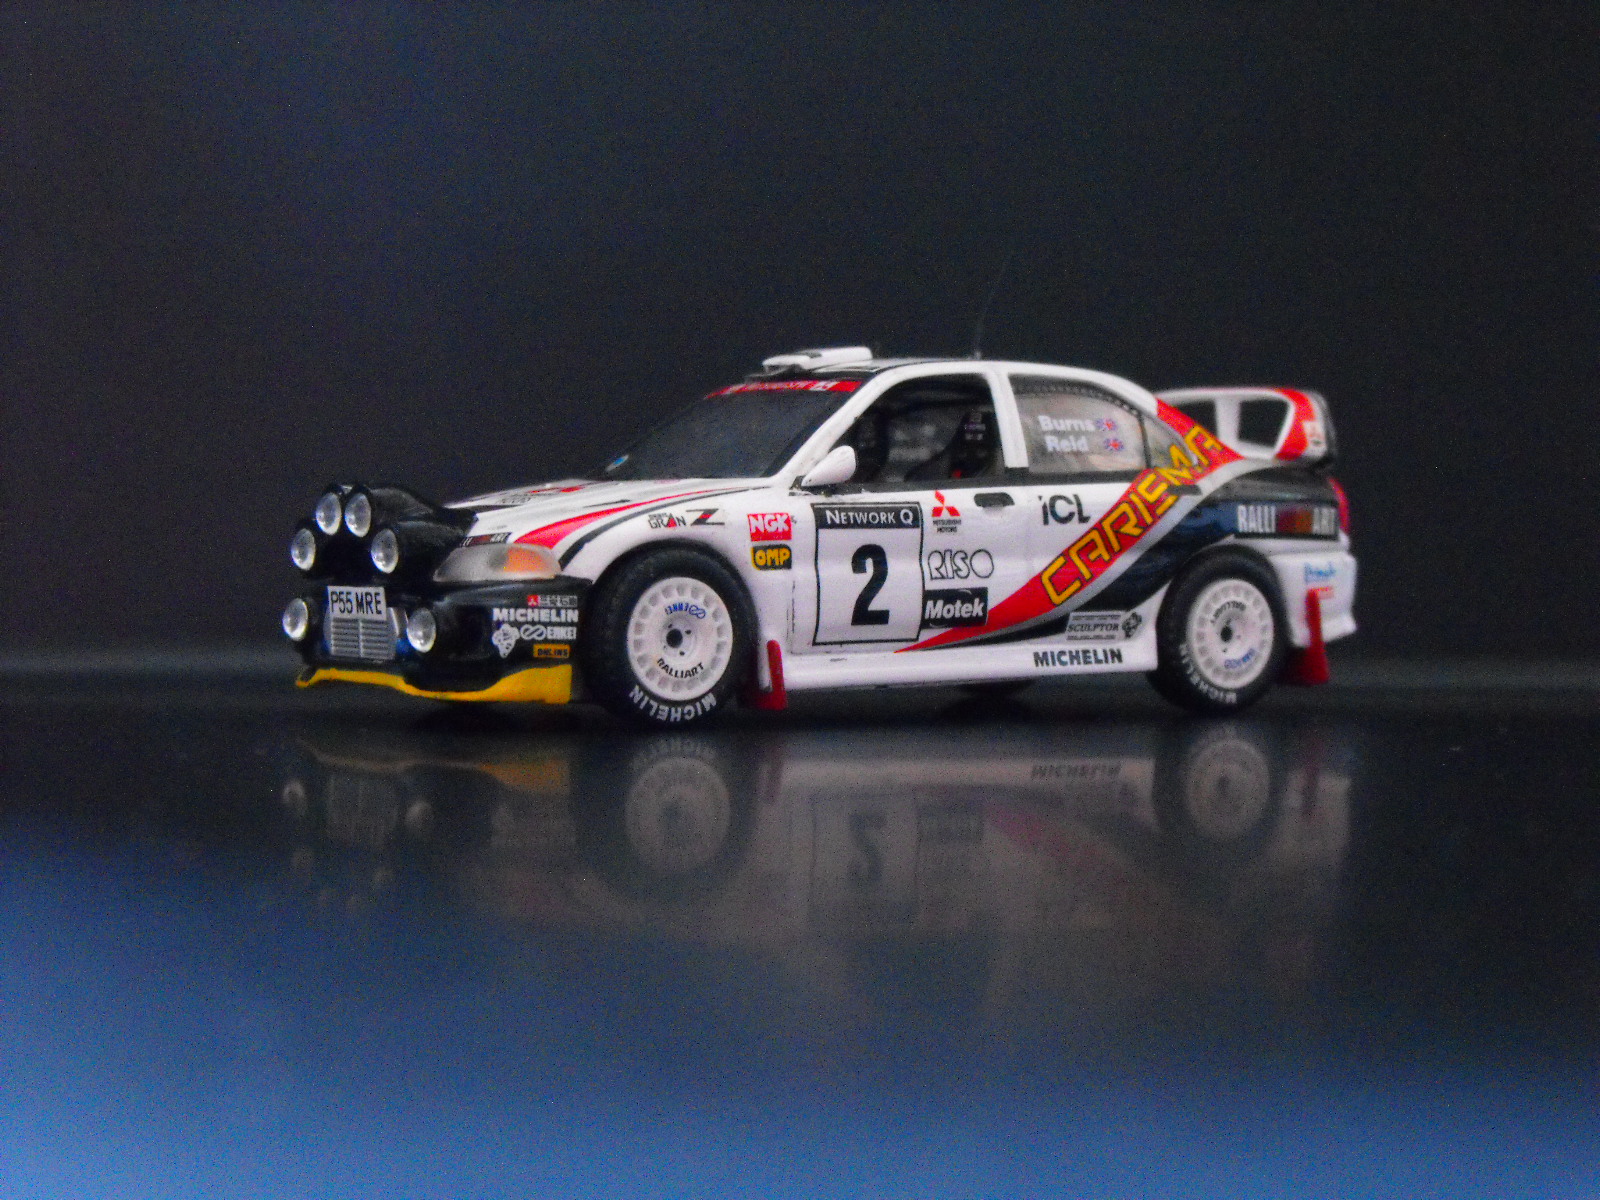 Mitsubishi Carisma GT Evo IV - Network Q RAC Rally 1997 - Burns 